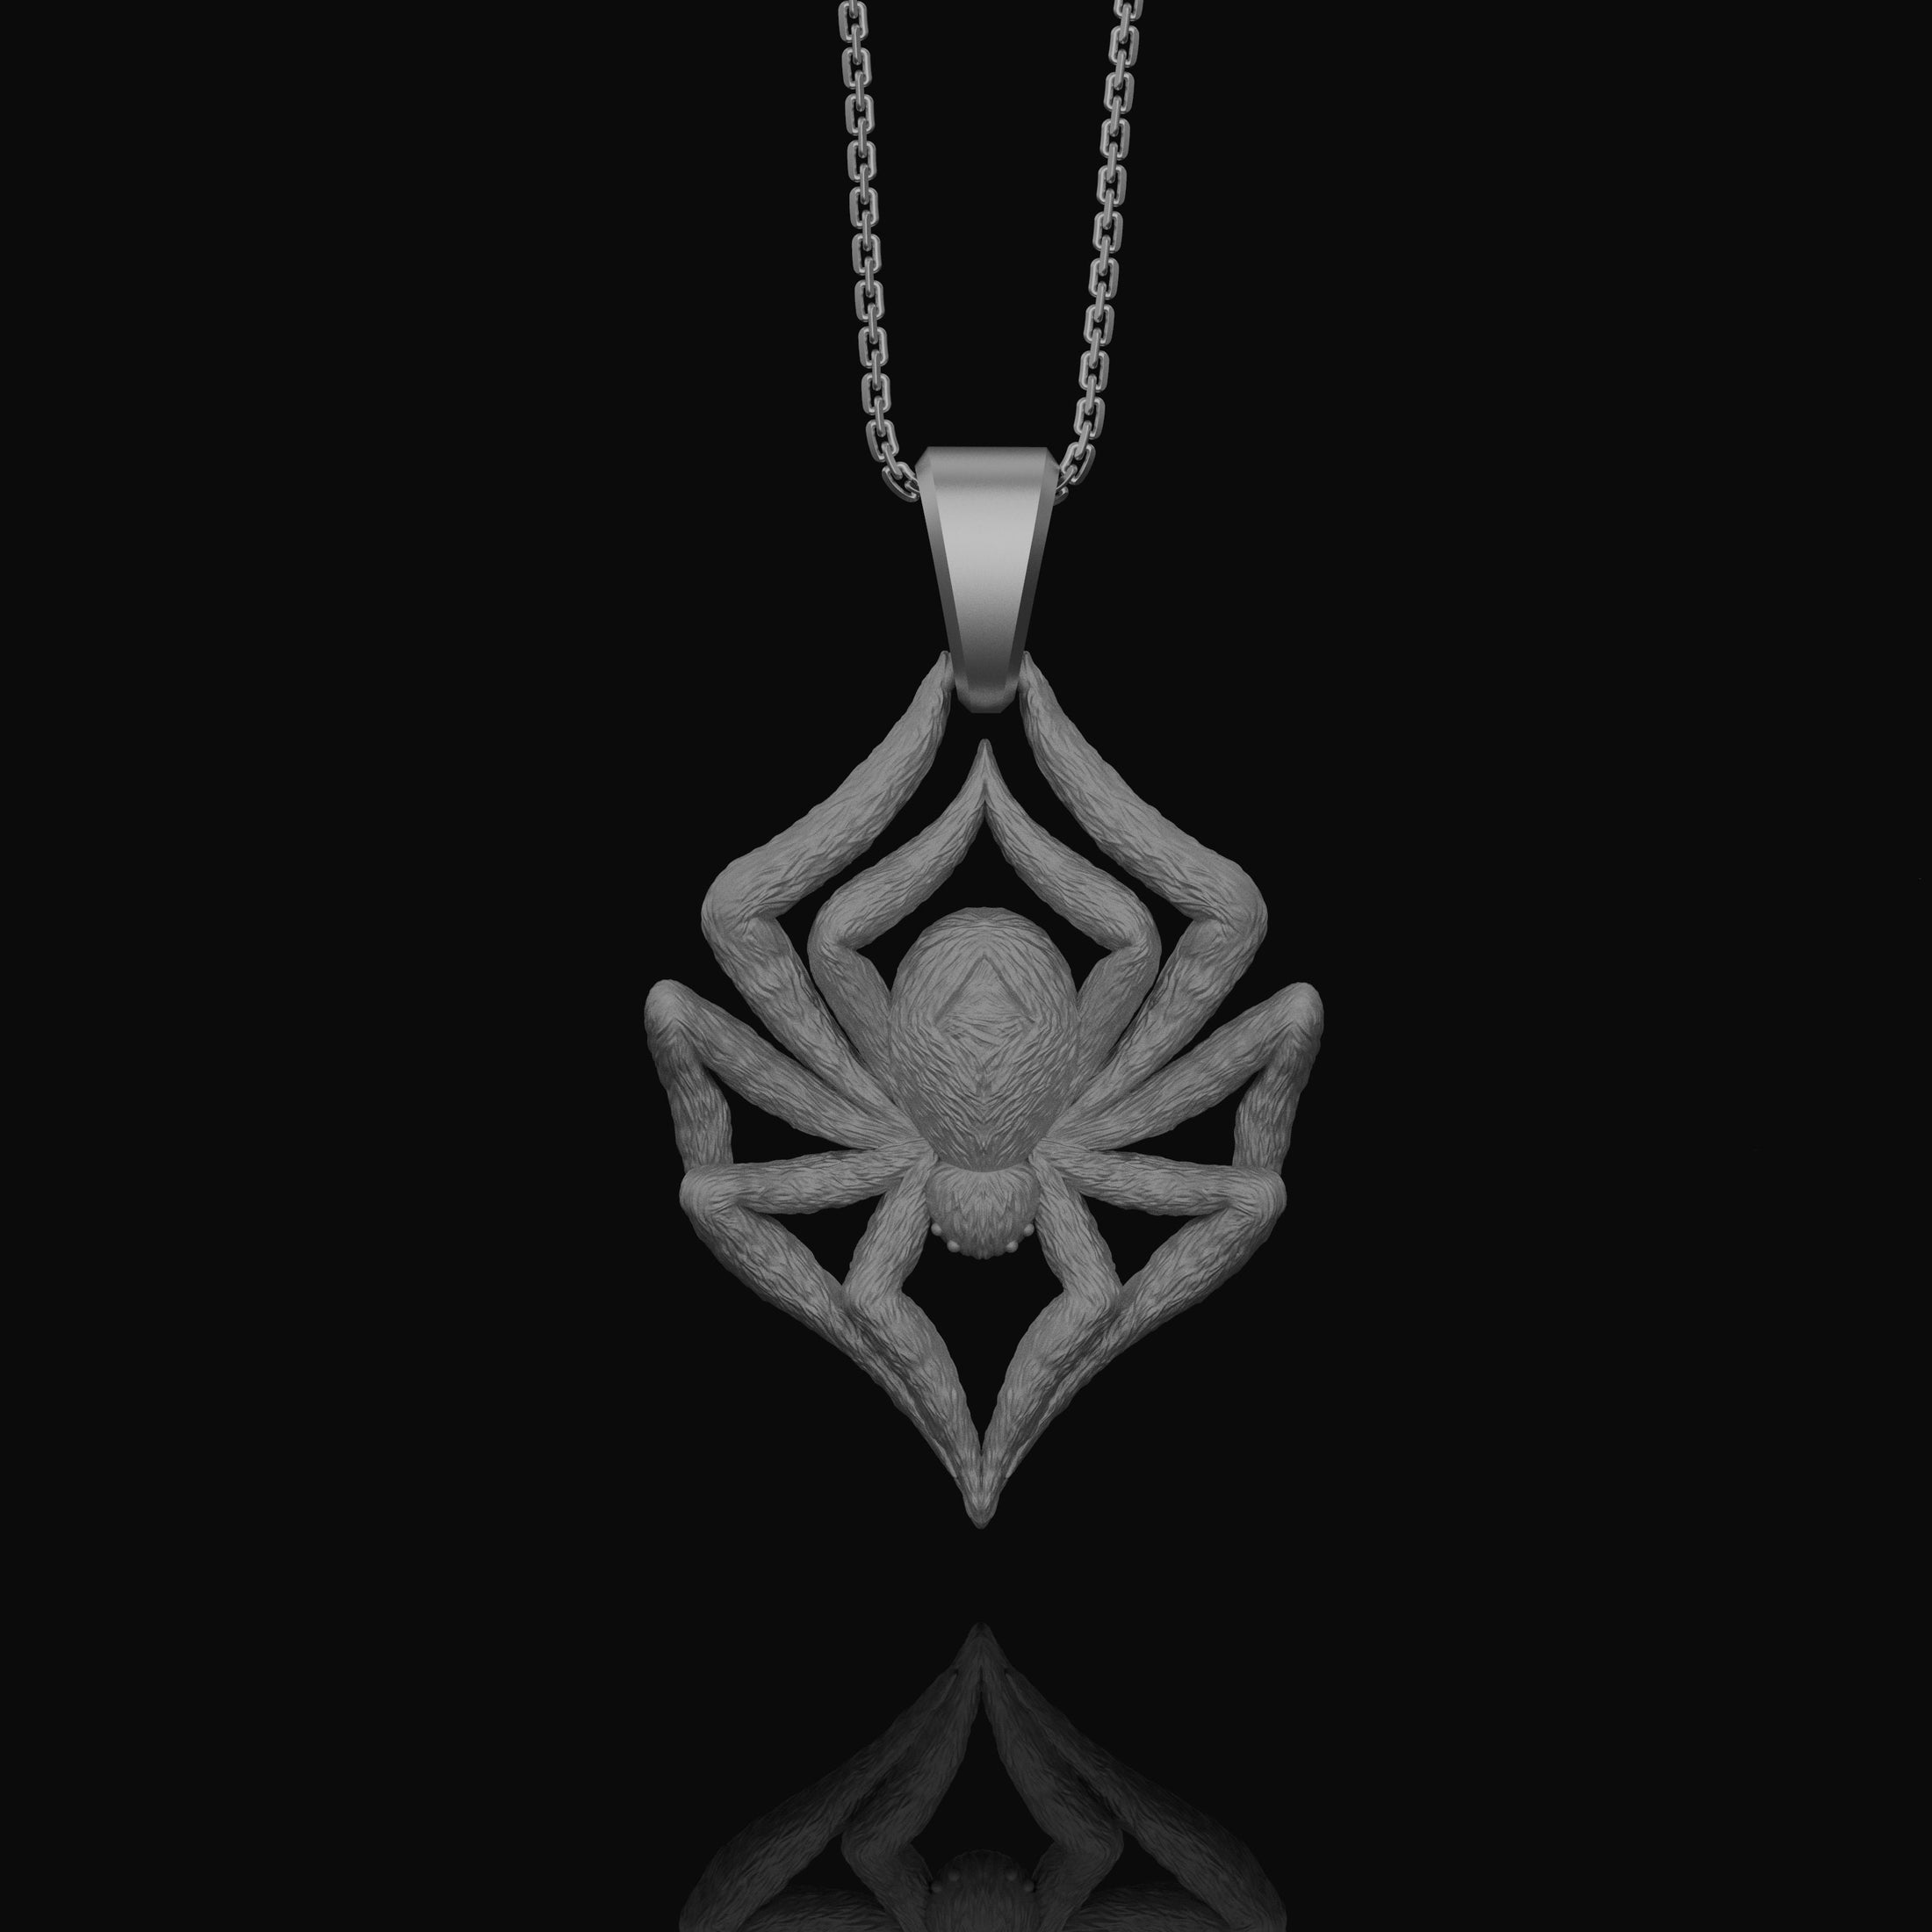 Silver Tarantula Pendant - Arachnid Charm, Spider Lover Jewelry, Unique Tarantula Necklace, Gift Idea